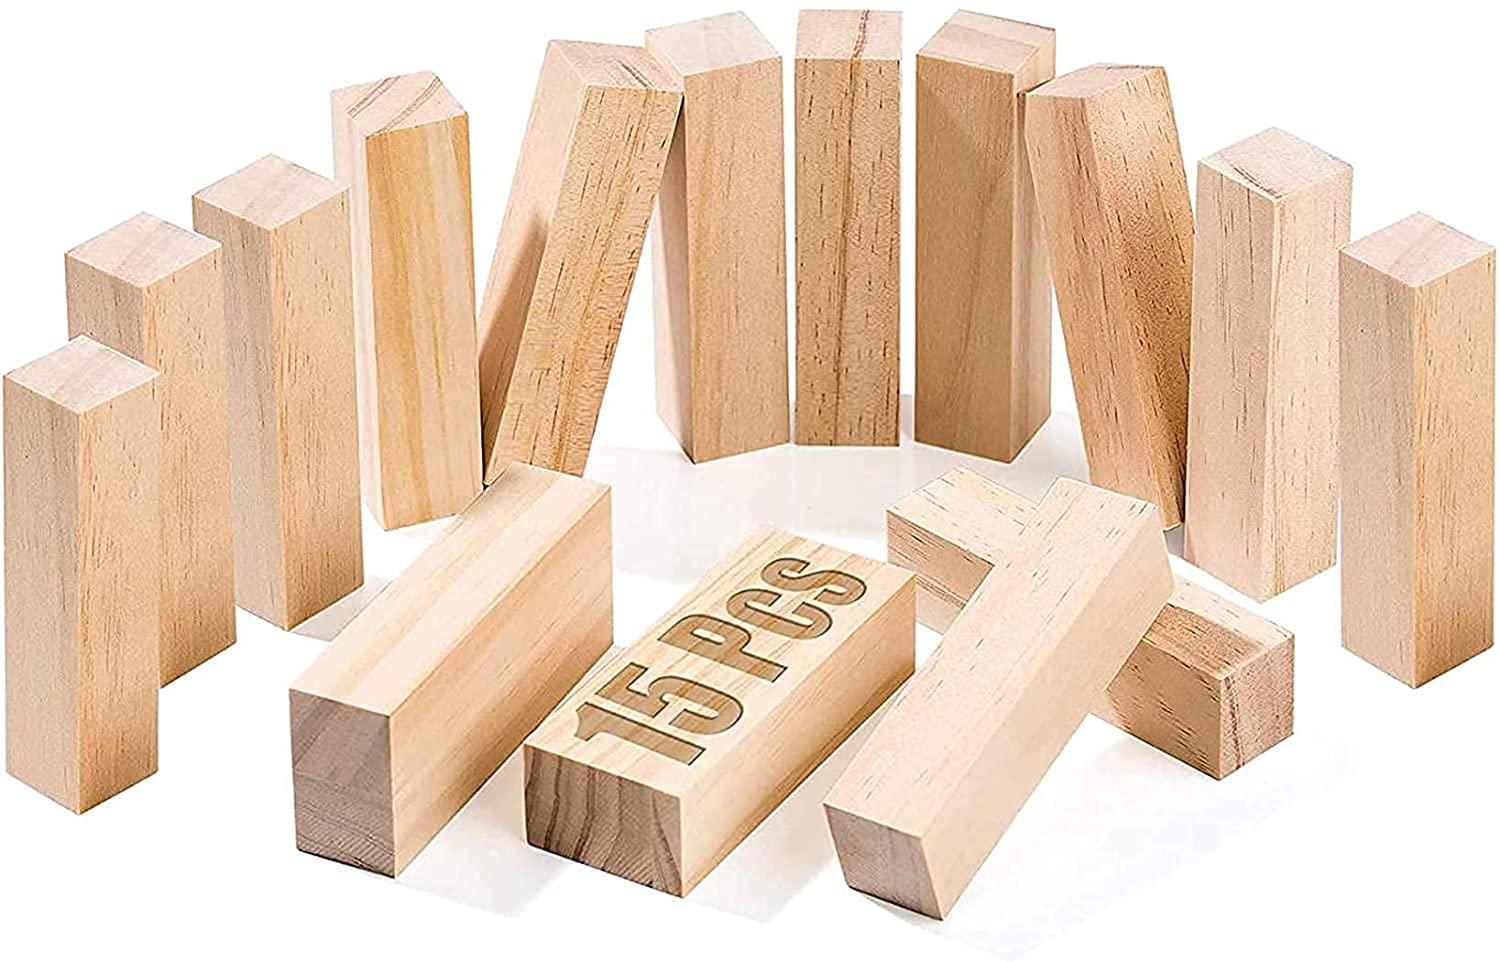  EXCEART 10pcs Pine Carved Wood Blocks Carving Wood